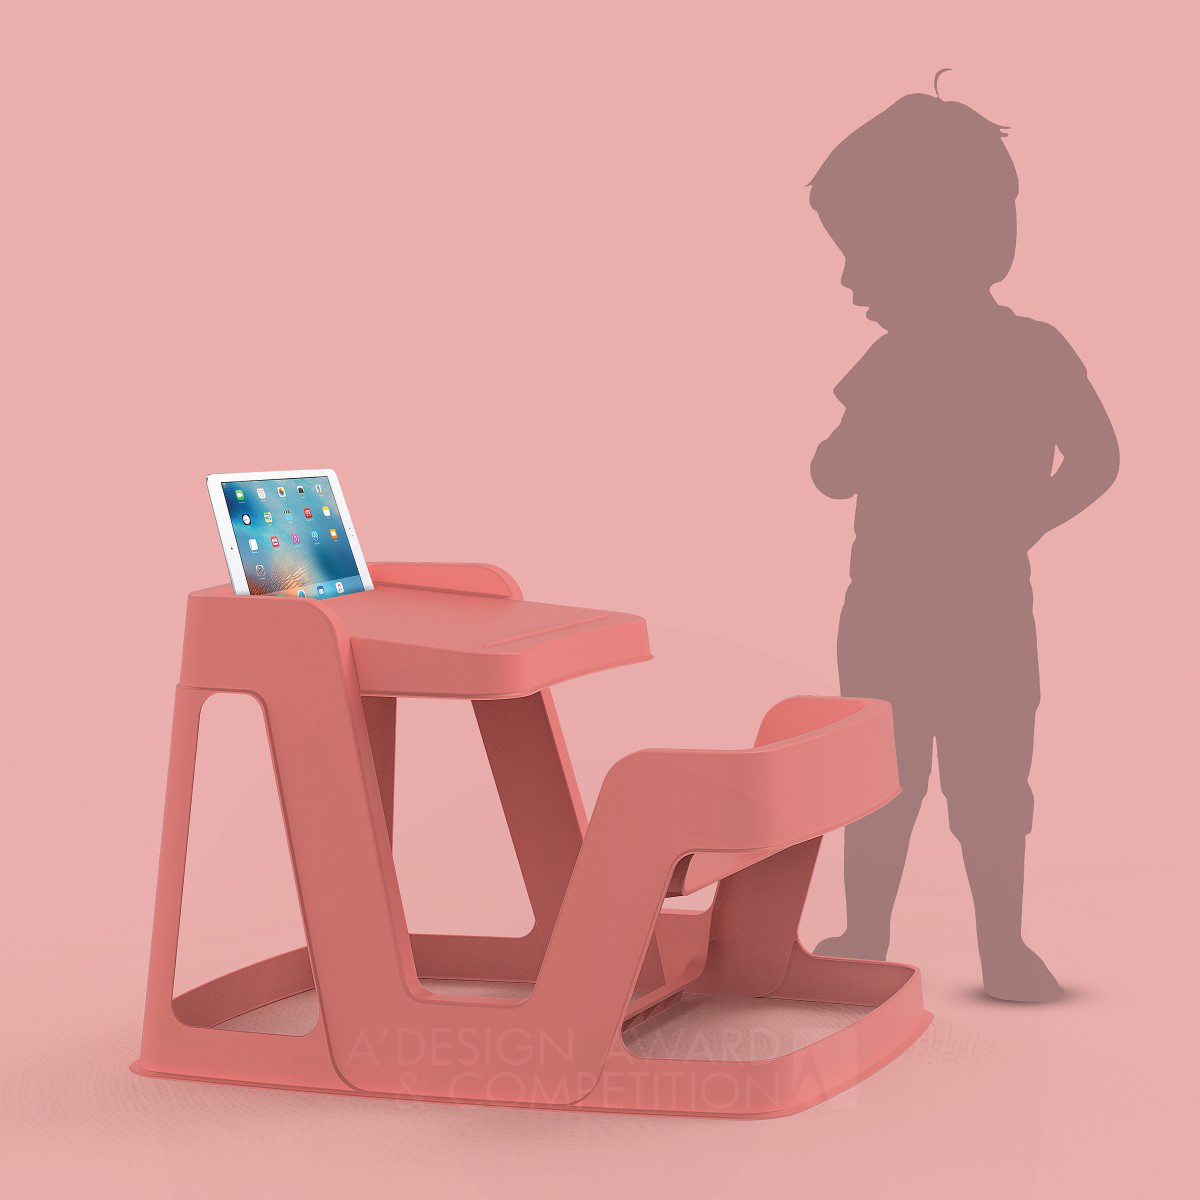  Baby Desk for Creative Development